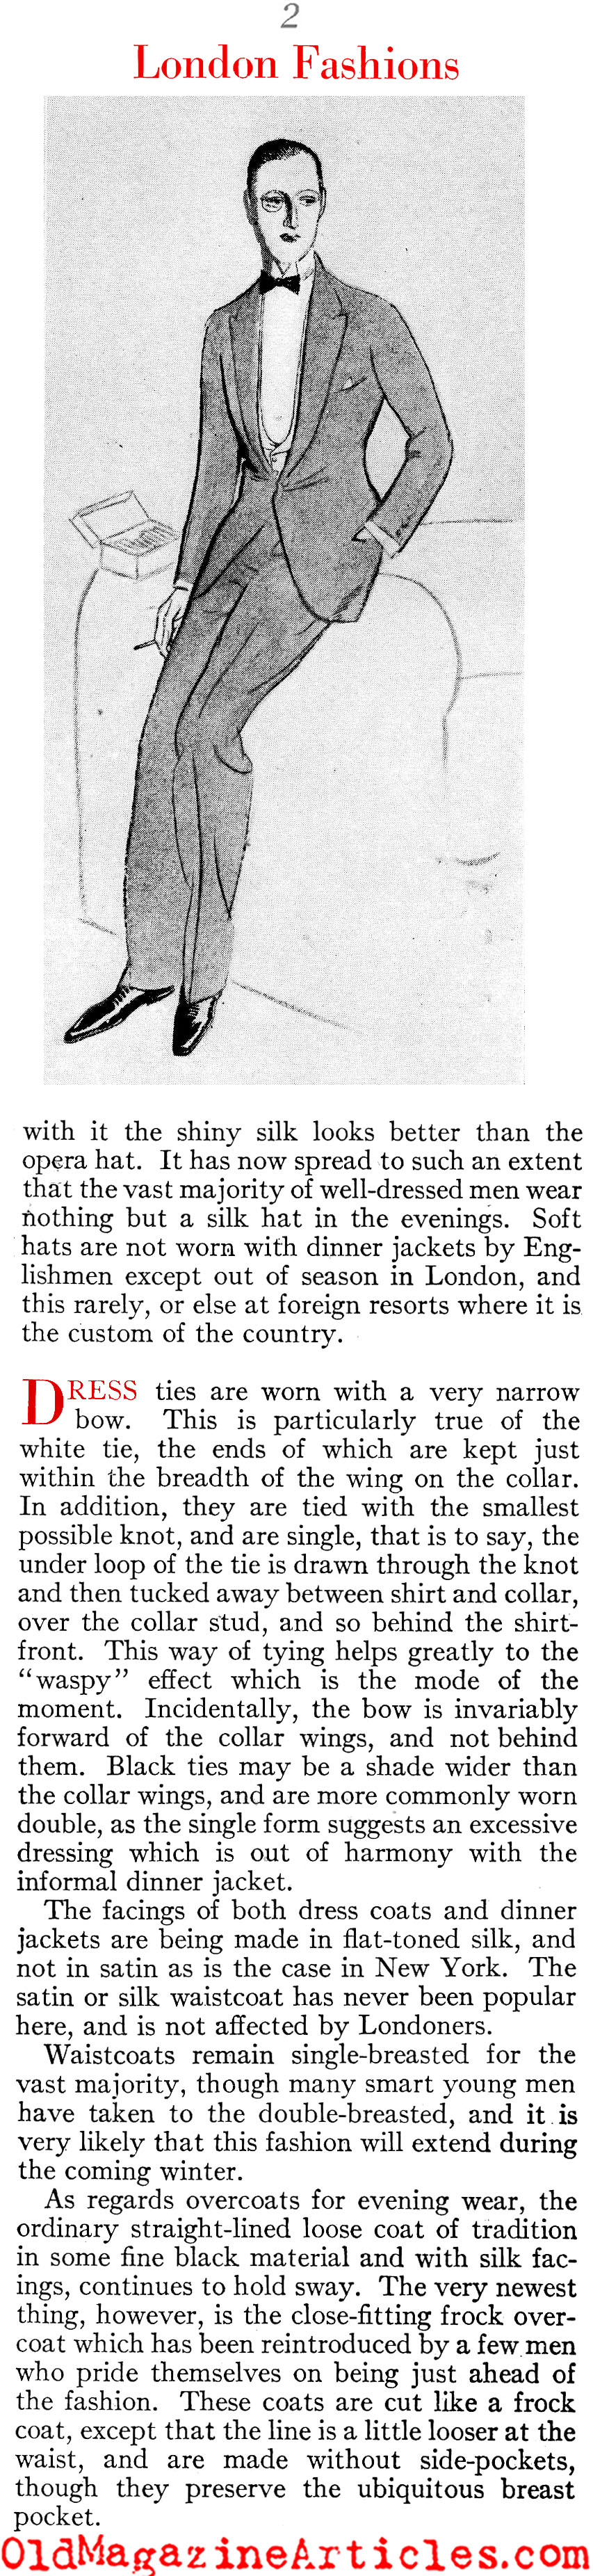 Fashion Notes from London (Vanity Fair Magazine, 1923)